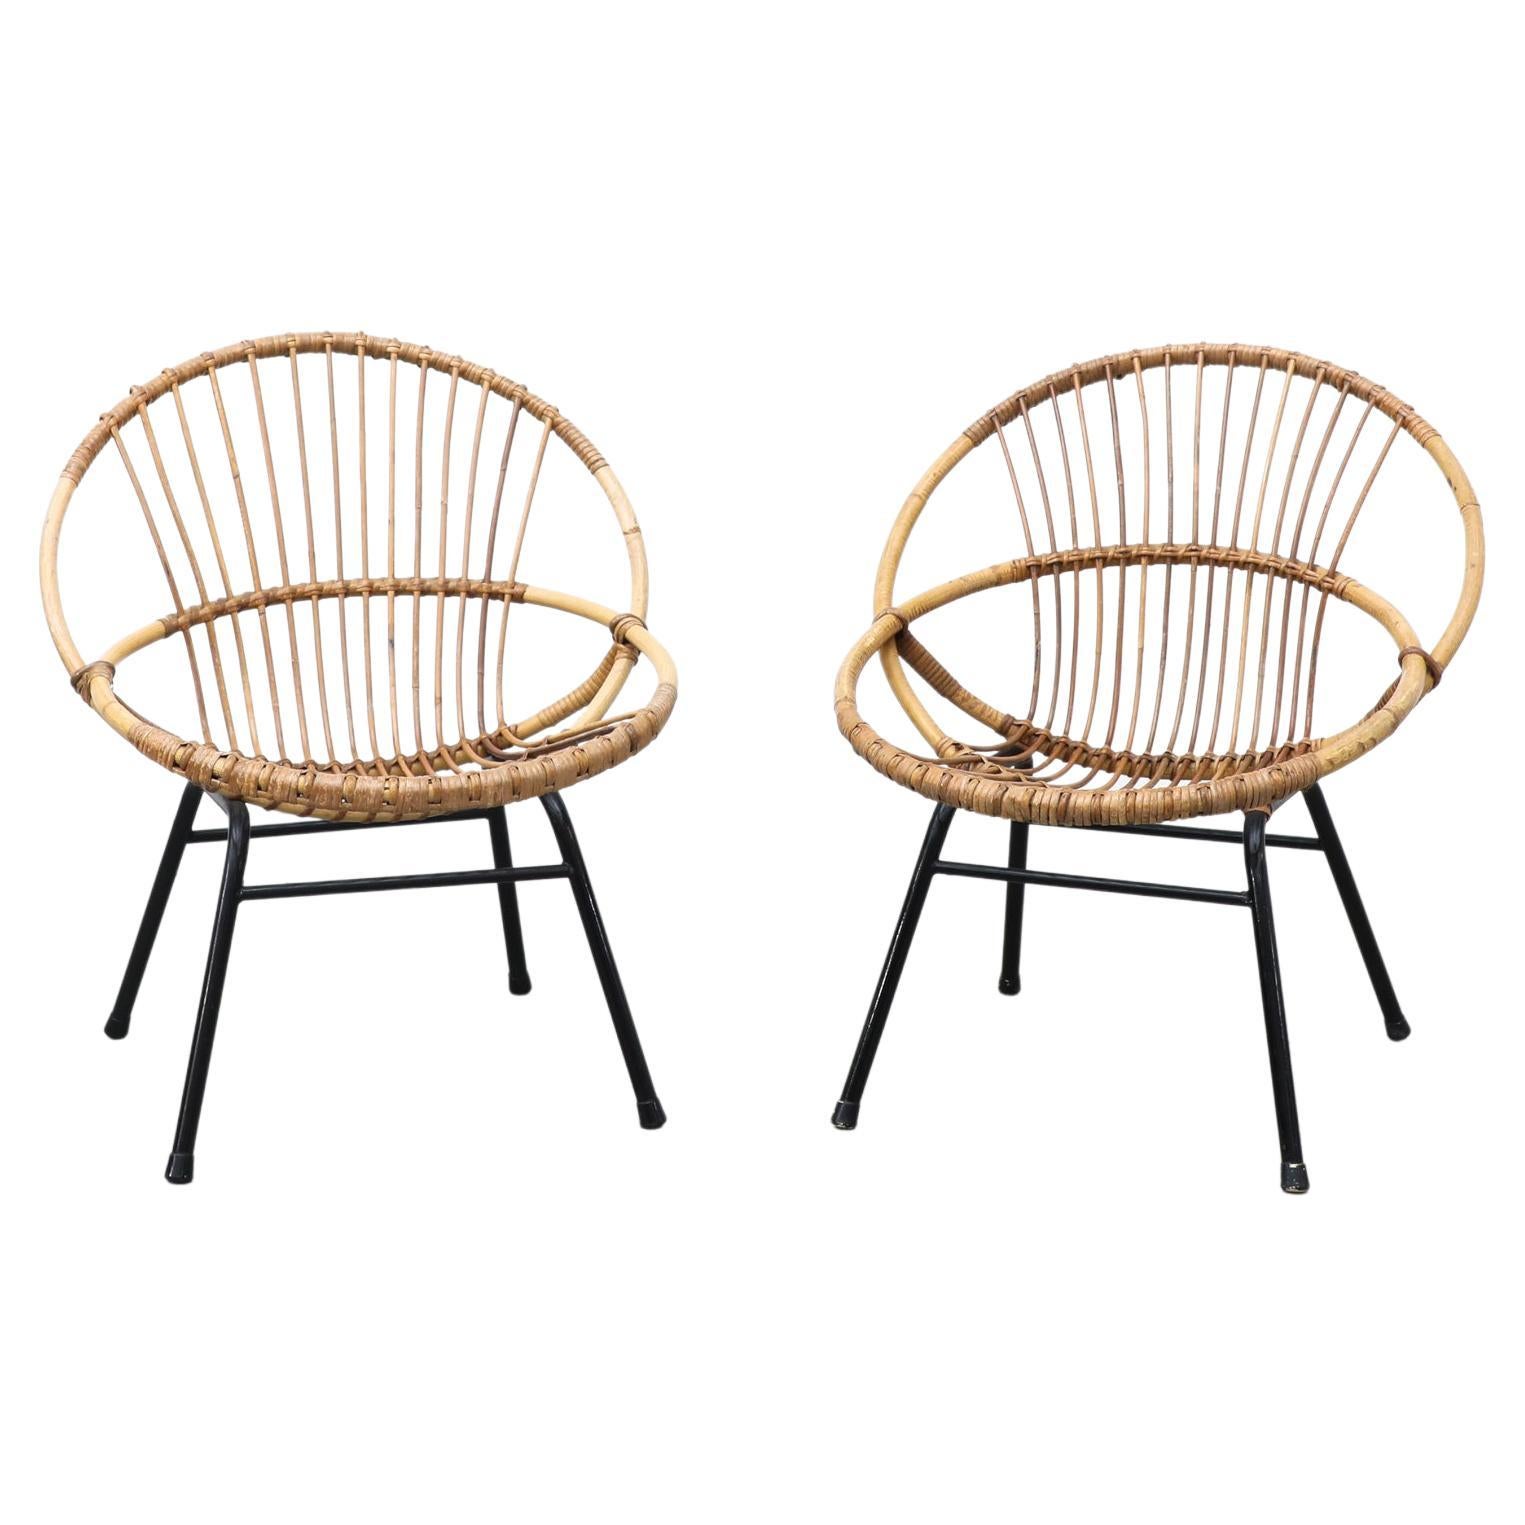 Pair of Rohe Noordwolde Bamboo Hoop Chairs with Black Tubular Legs